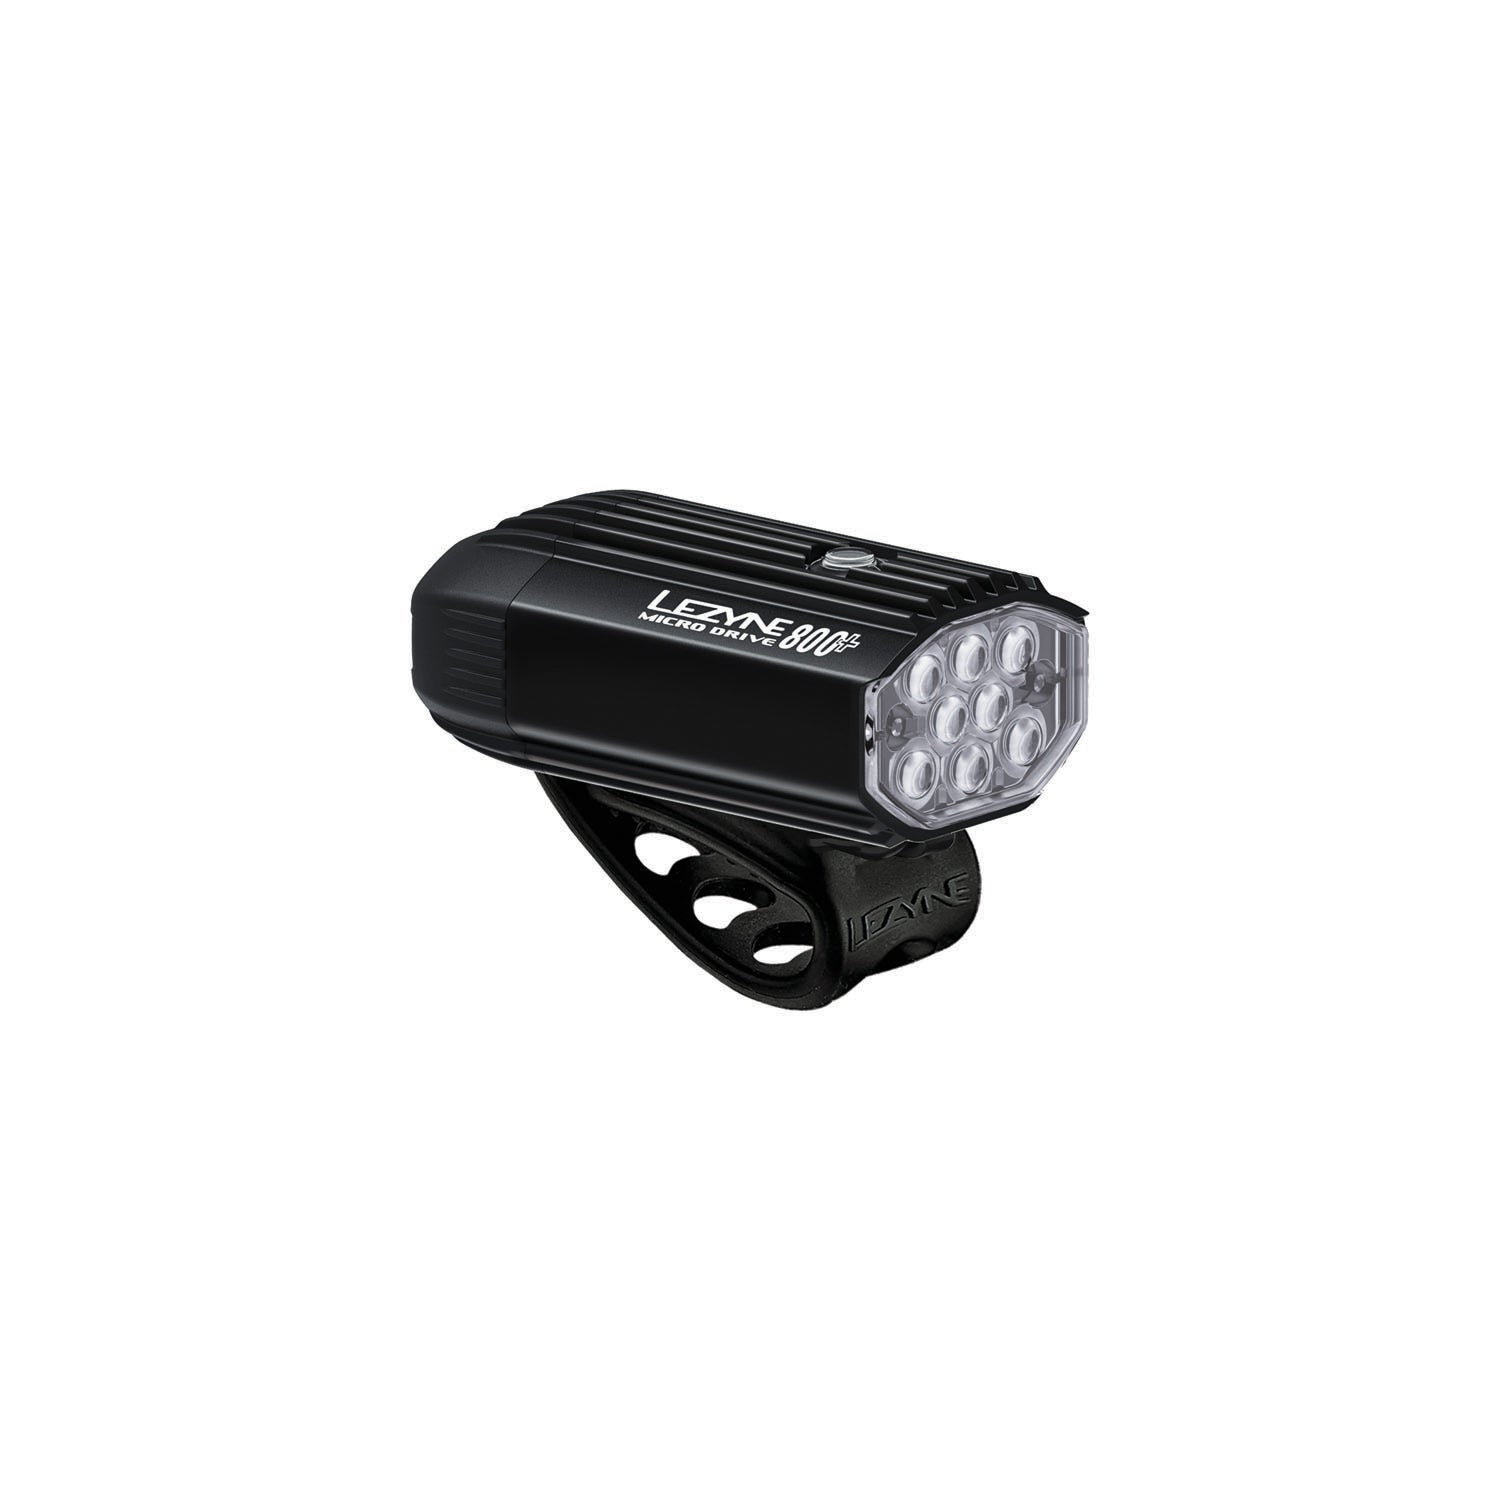 Micro Drive 800+ front bike light